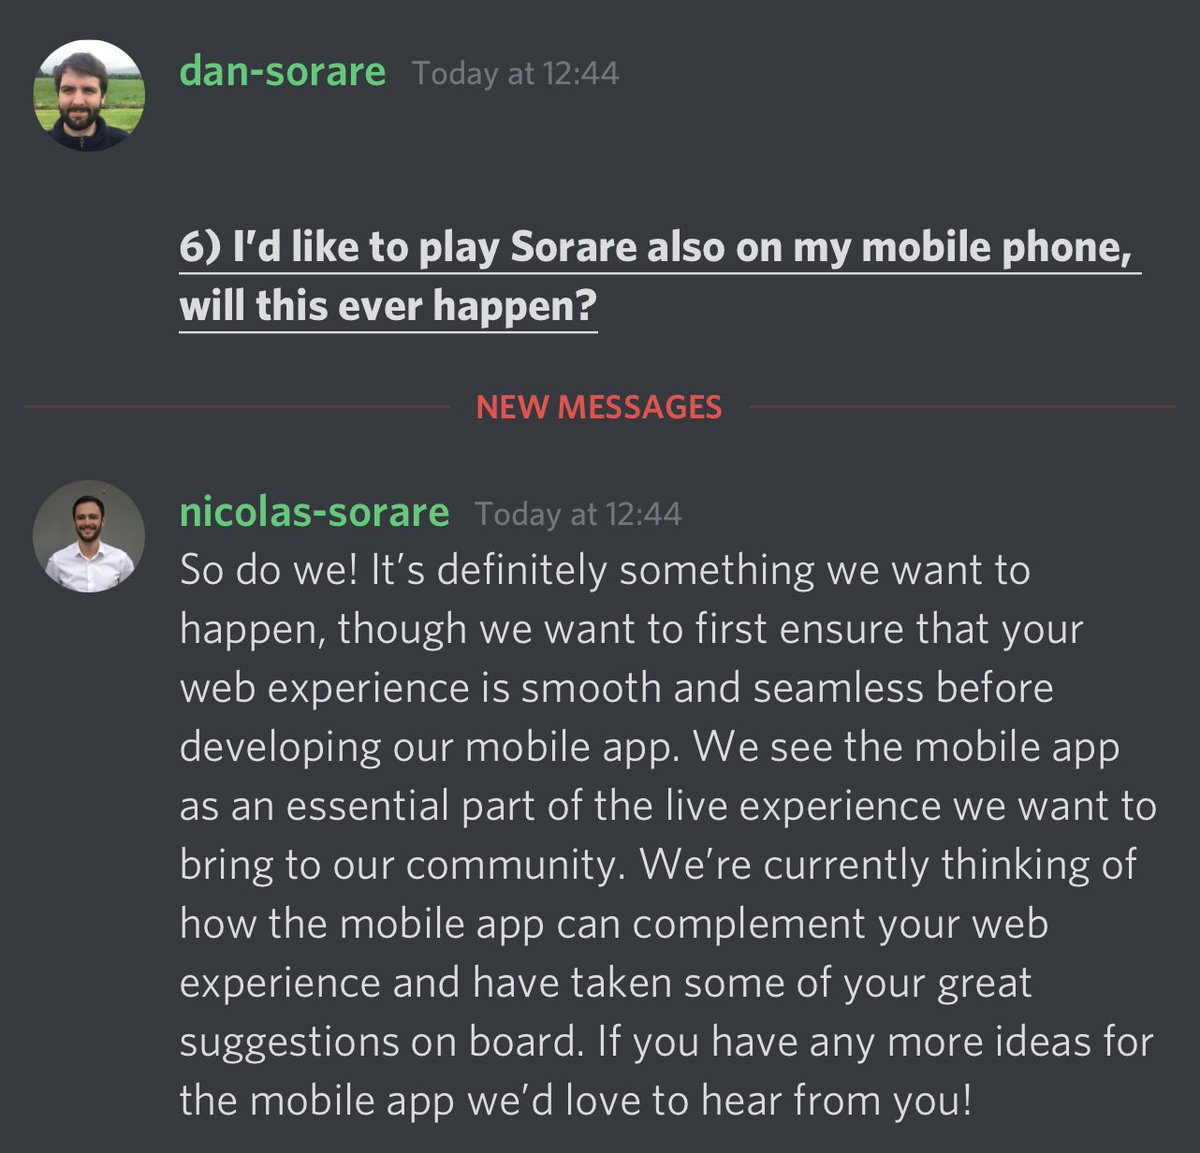 Question 6 & Response (Mobile App)